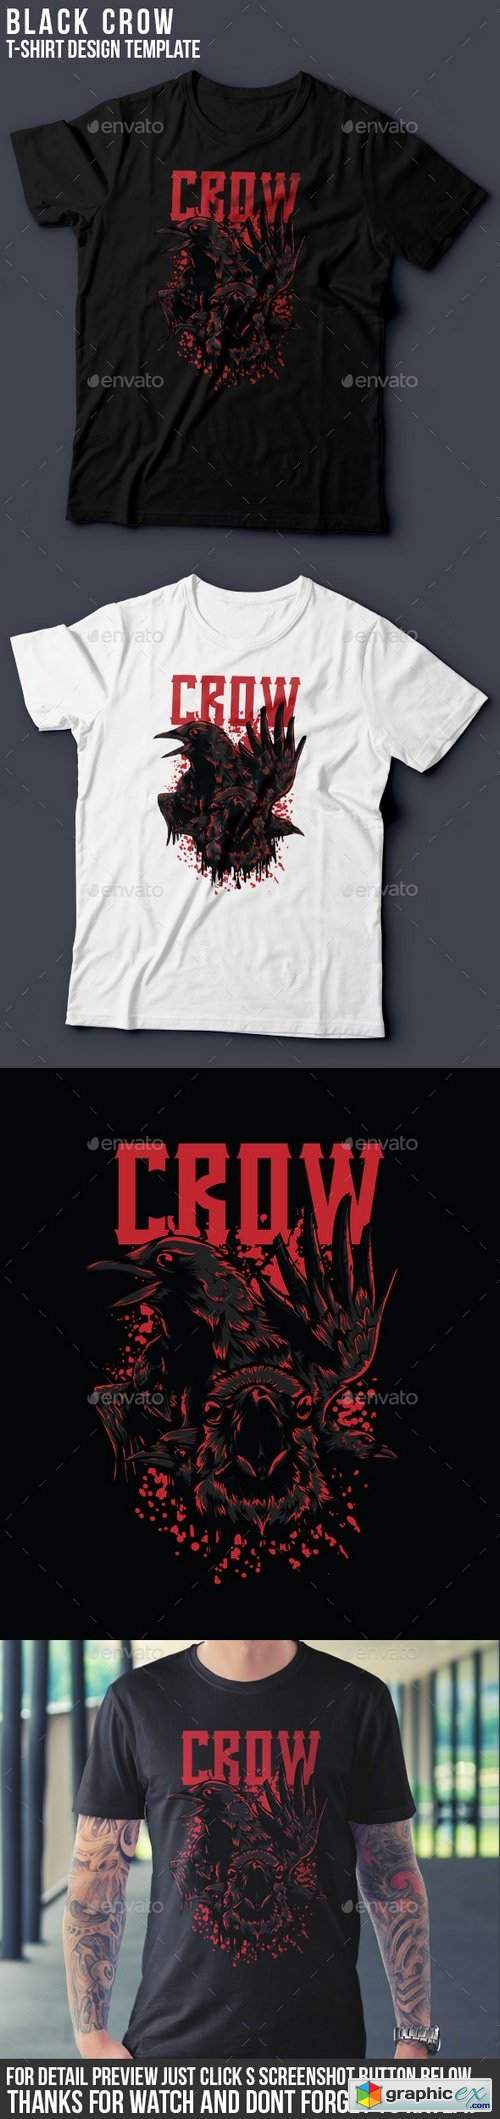 Black Crow T-Shirt Design